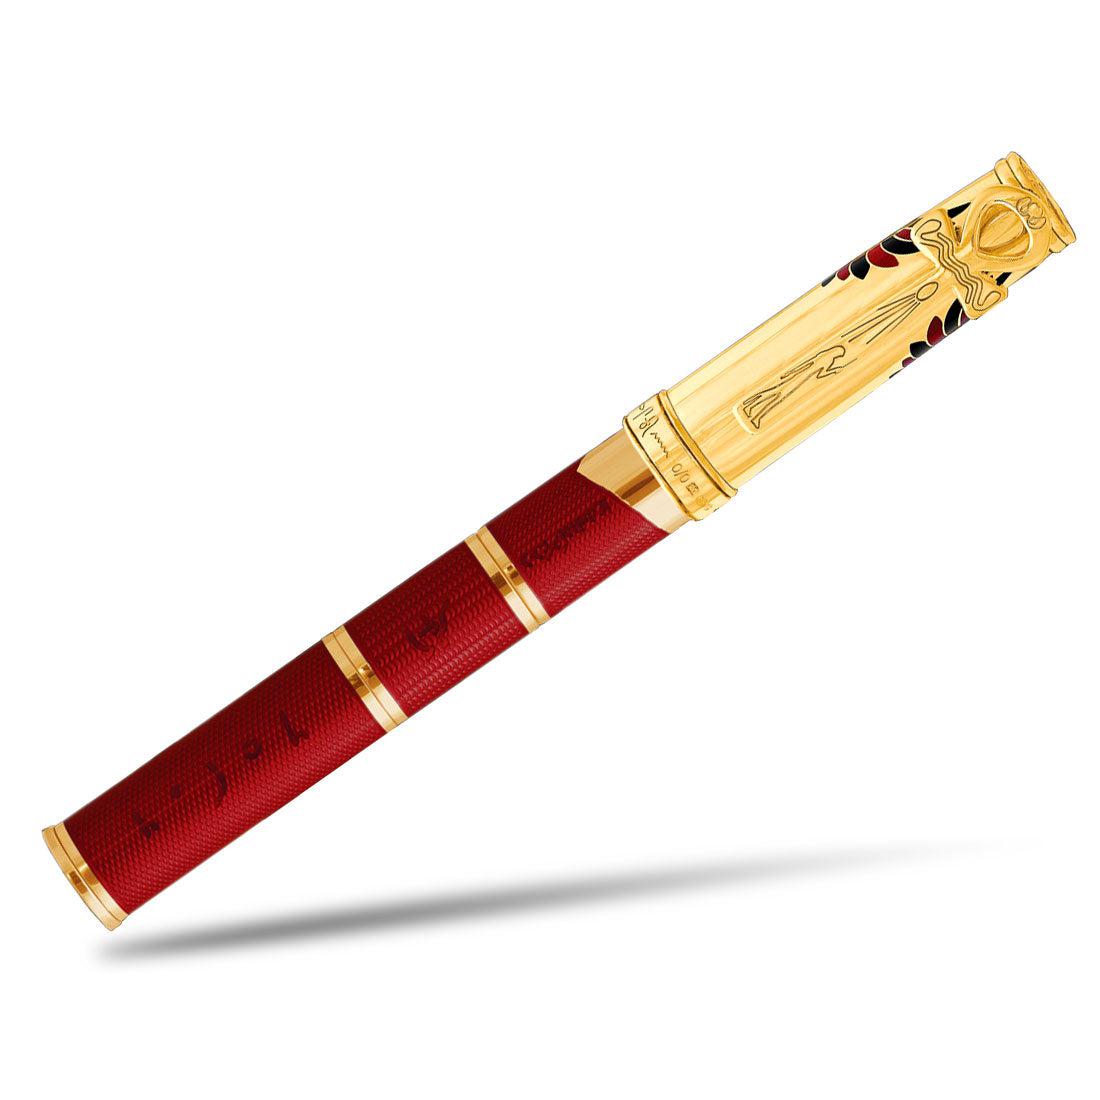 David Oscarson Rosetta Stone Fountain Pen - Translucent Red and Opaque Black Hard Enamel w/ Gold vermeil-Pen Boutique Ltd